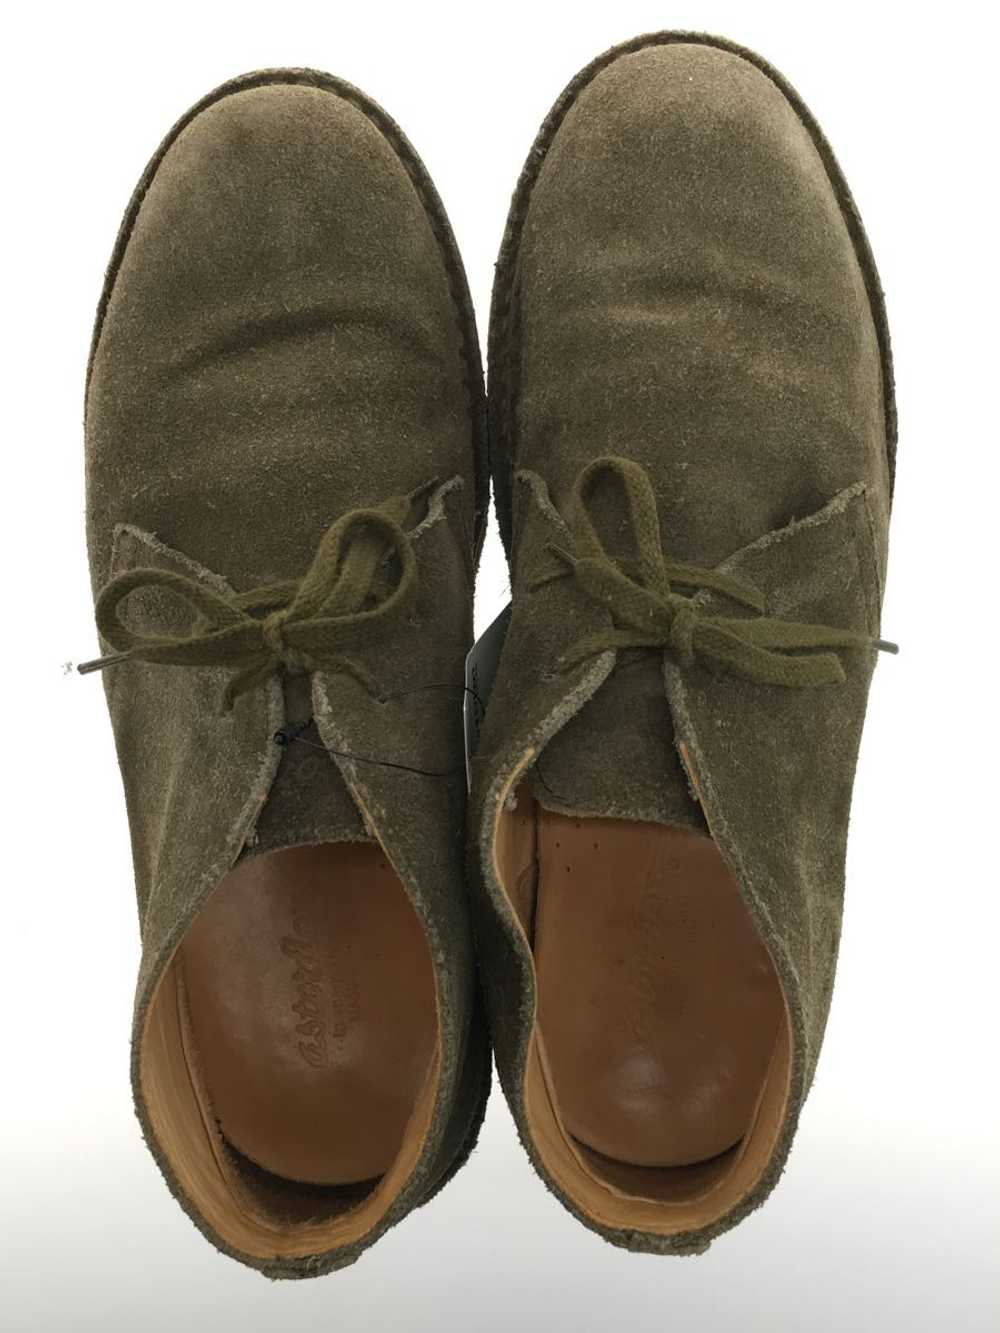 Astorflex Boots/43/Khk/Suede Shoes BYH69 - image 3